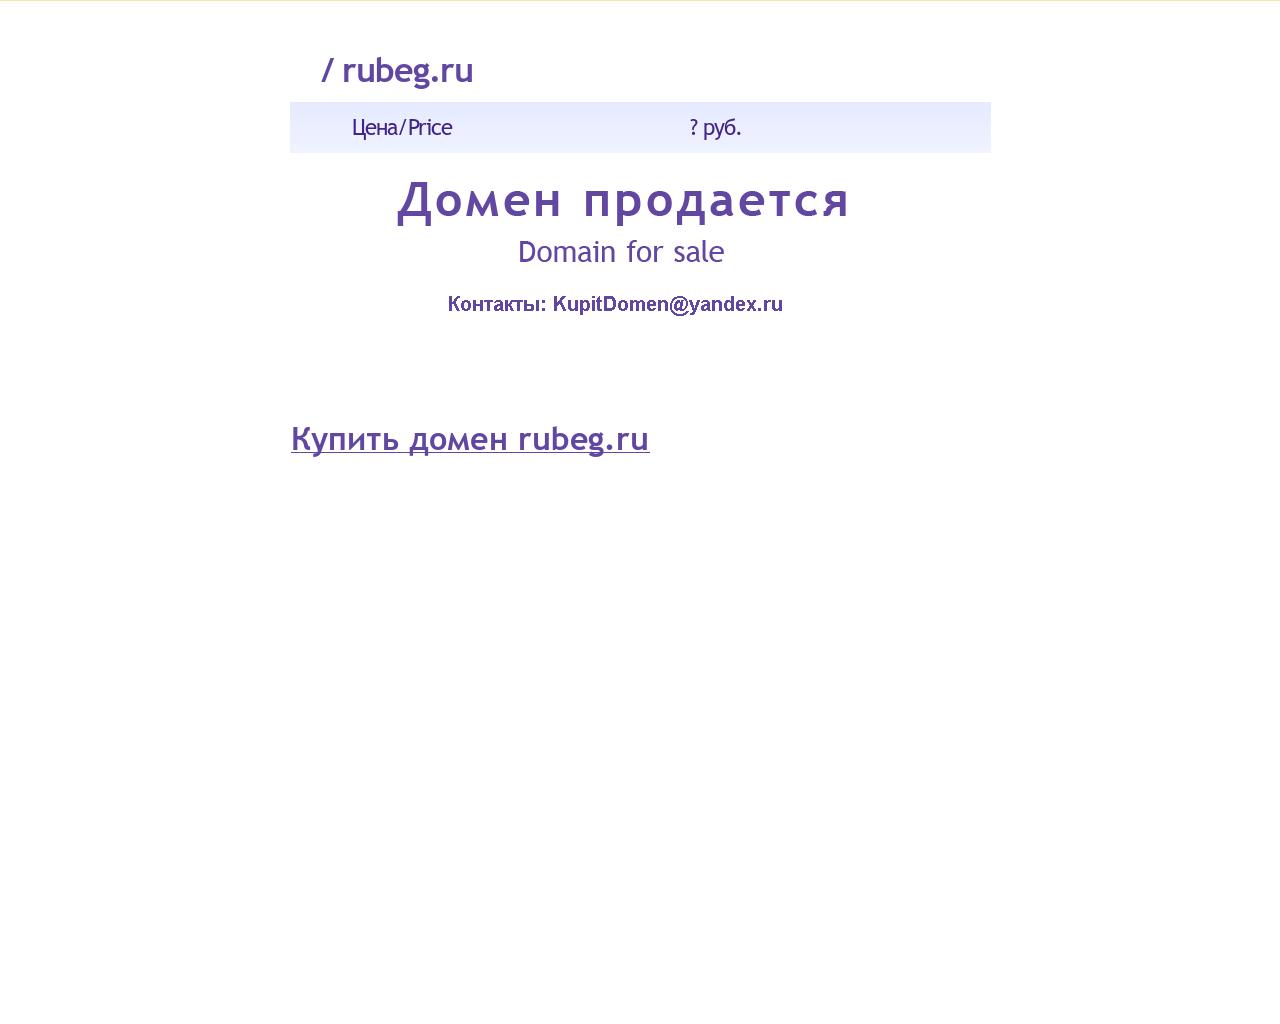 Изображение сайта rubeg.ru в разрешении 1280x1024